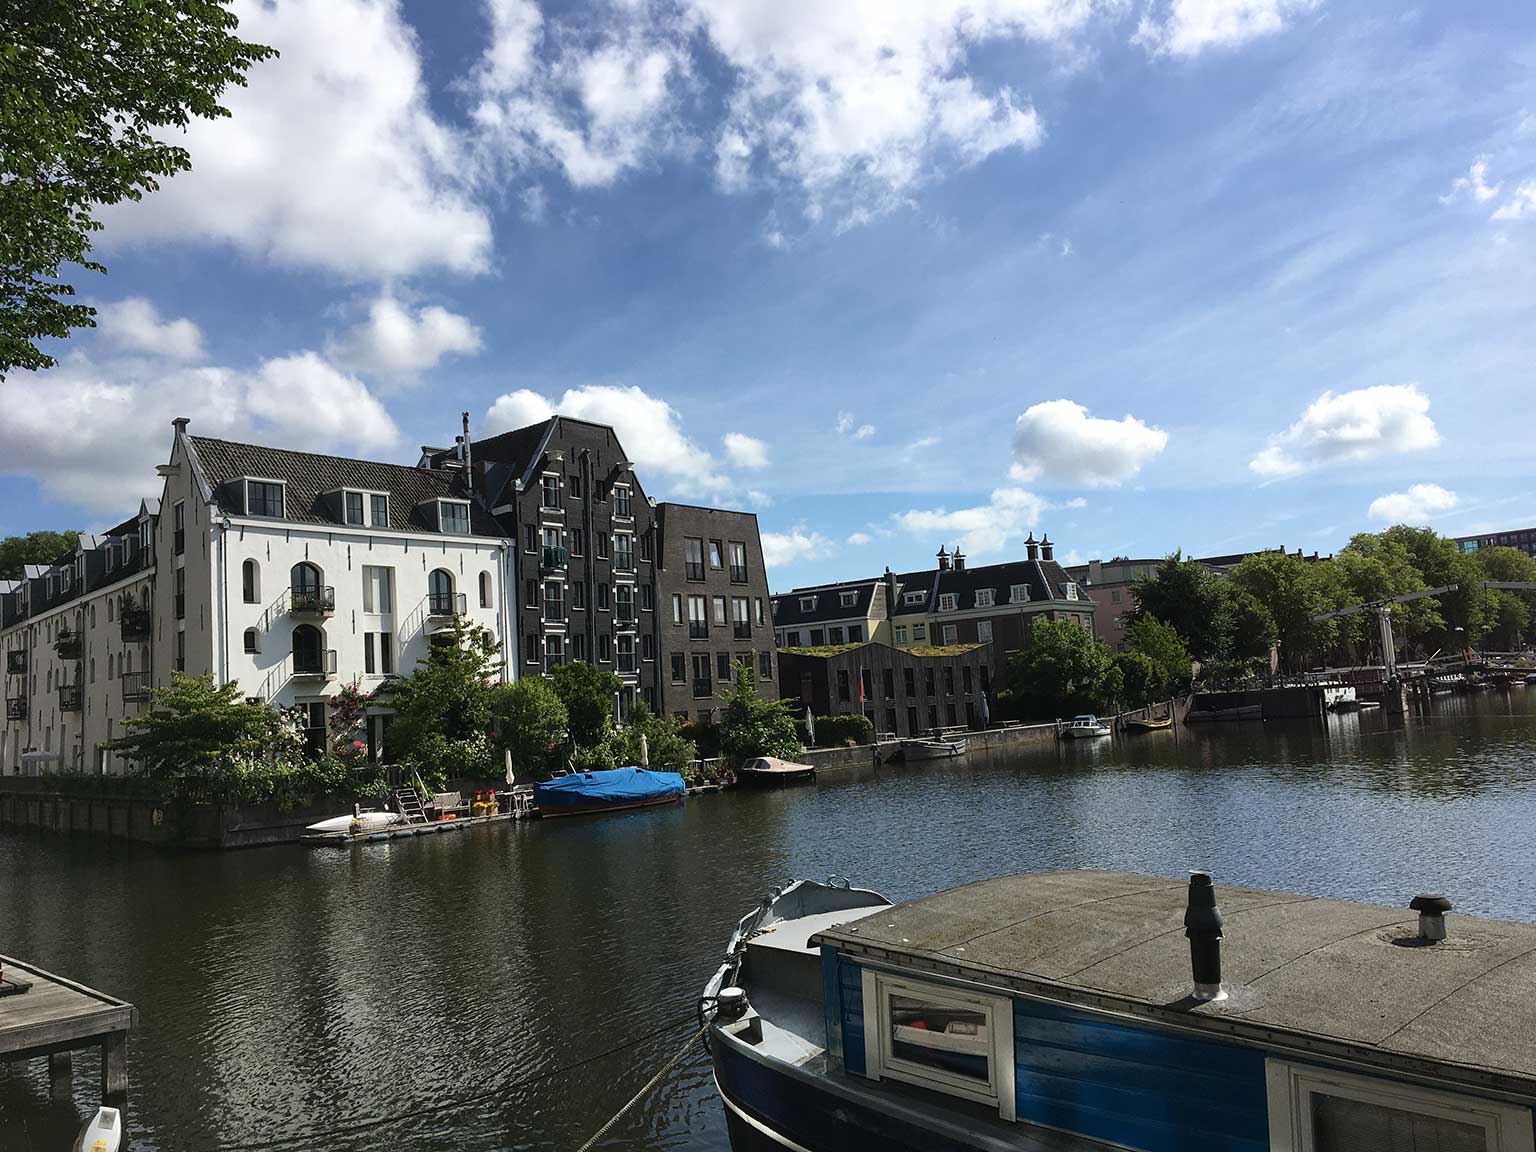 View from Nieuwe Teertuinen towards Realeneiland across Realengracht, Amsterdam